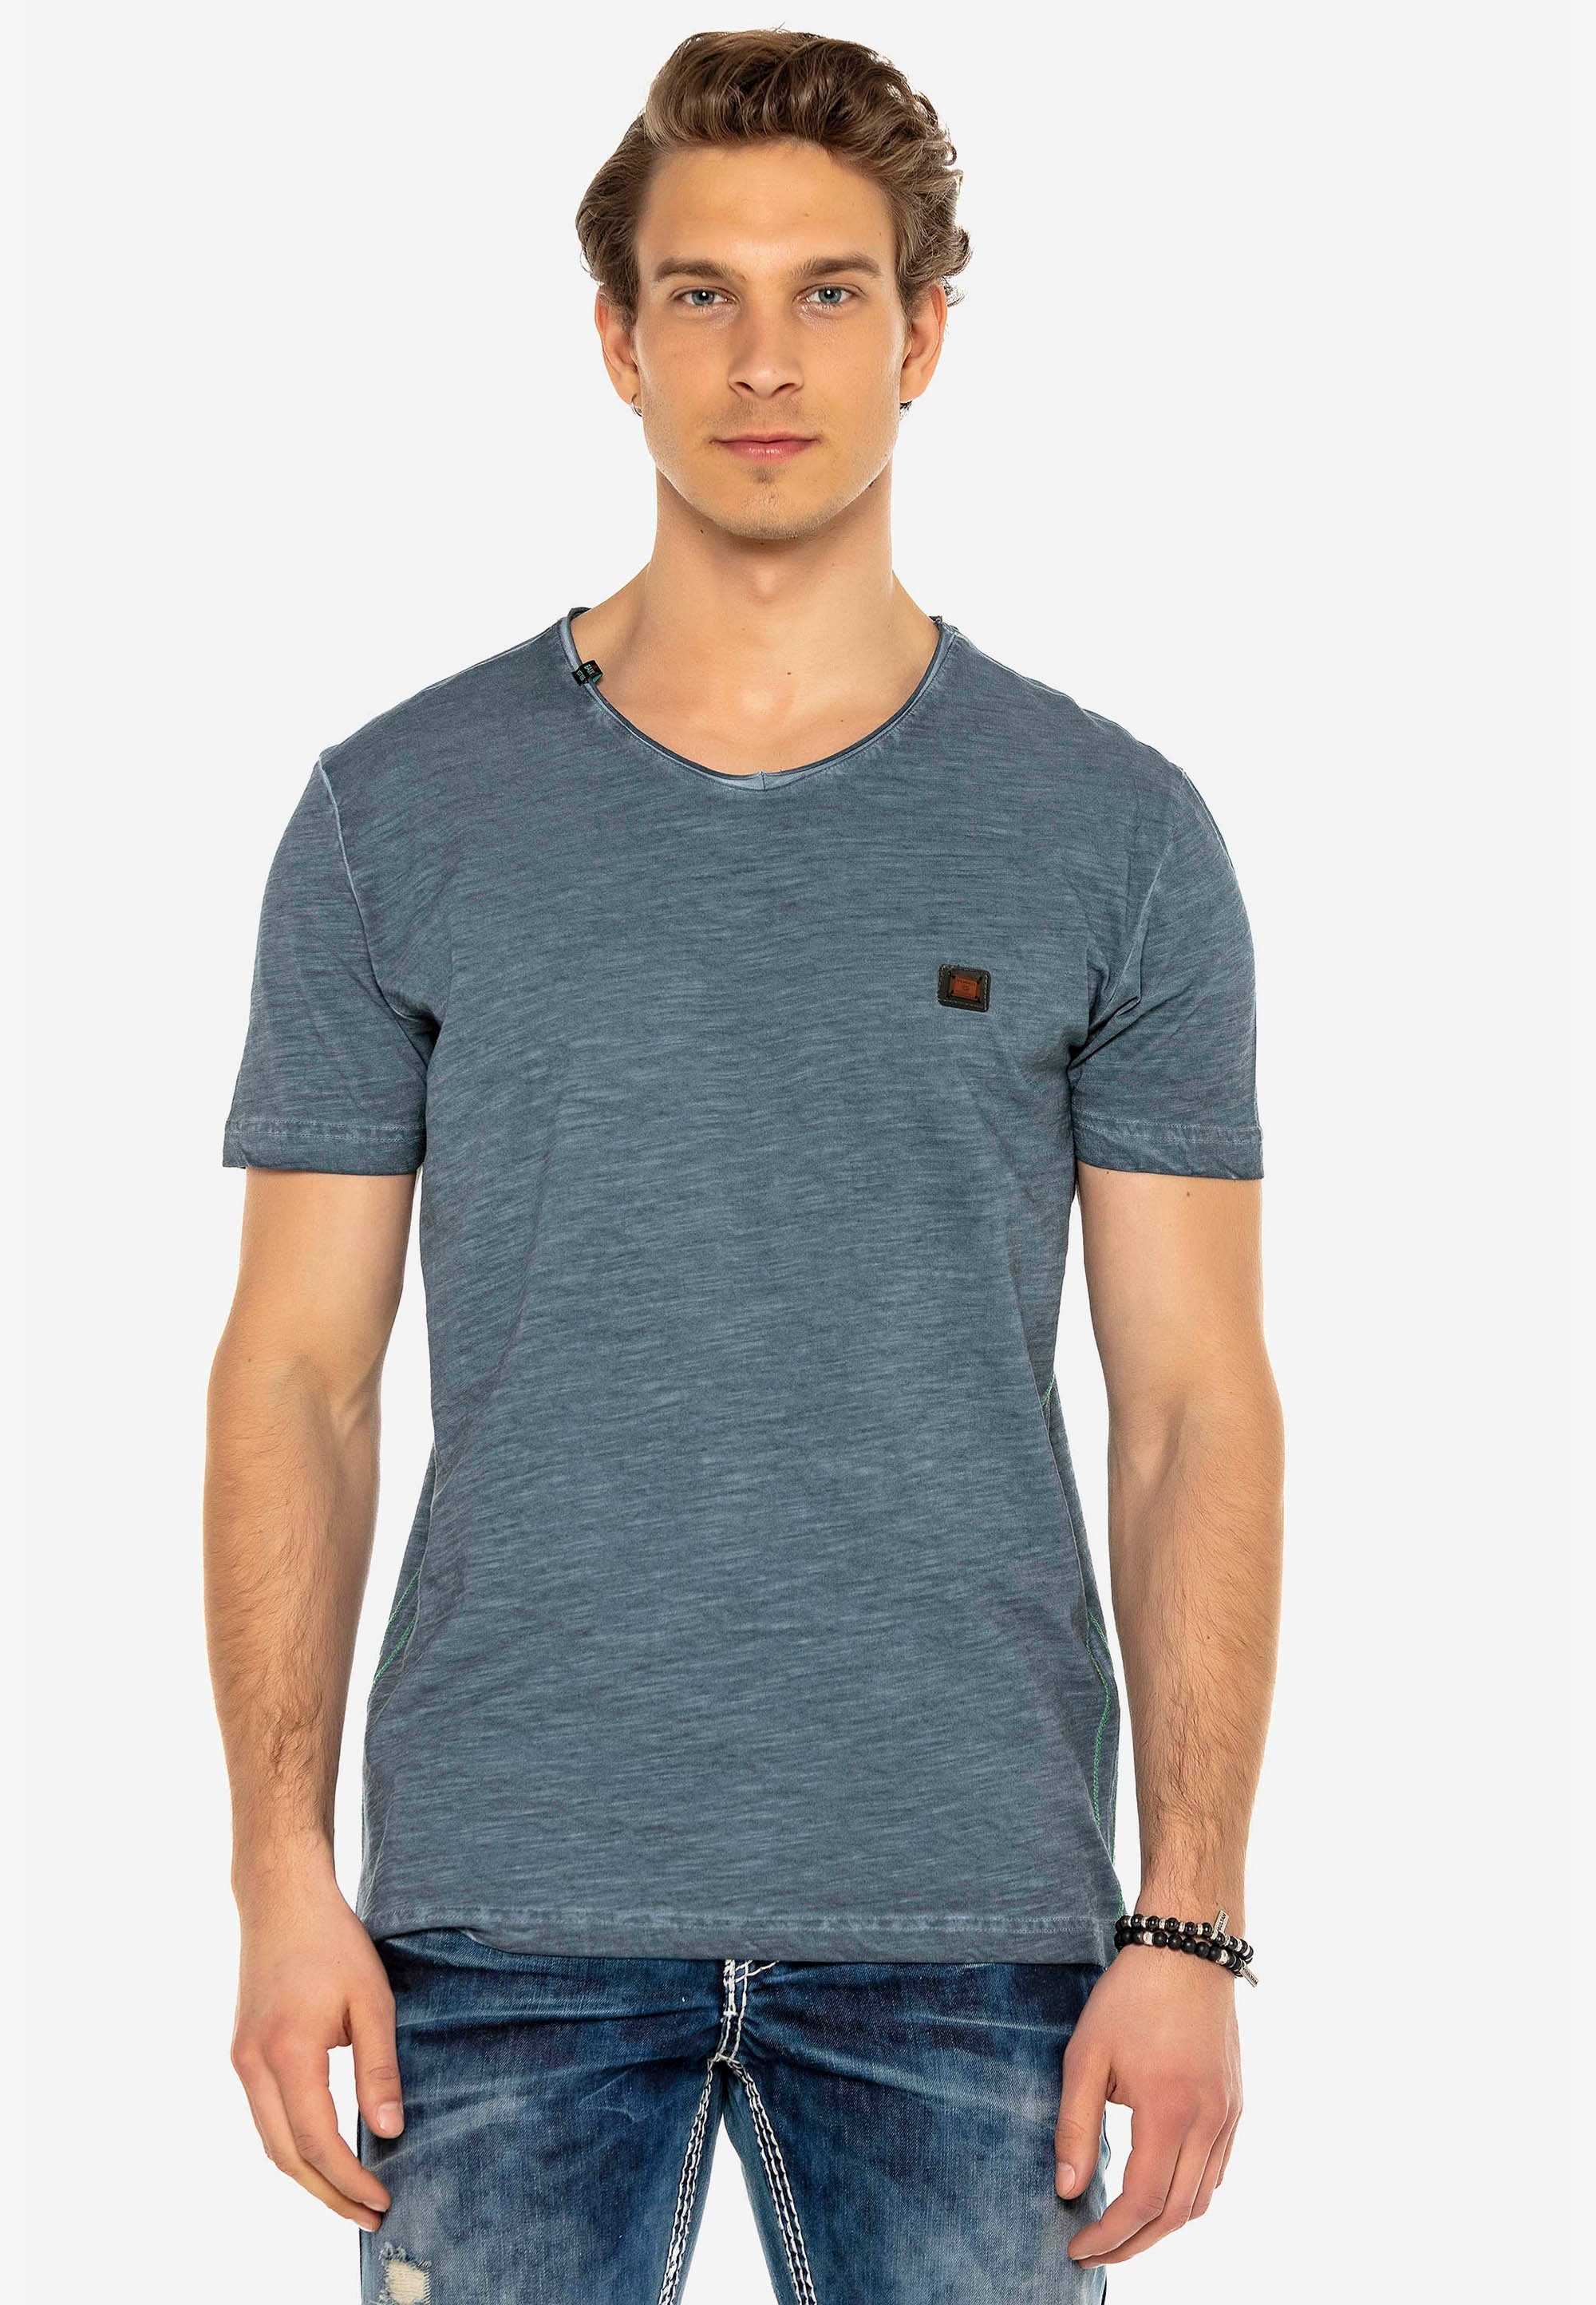 Cipo & Baxx T-Shirt mit kleinem Logo-Patch indigo | V-Shirts